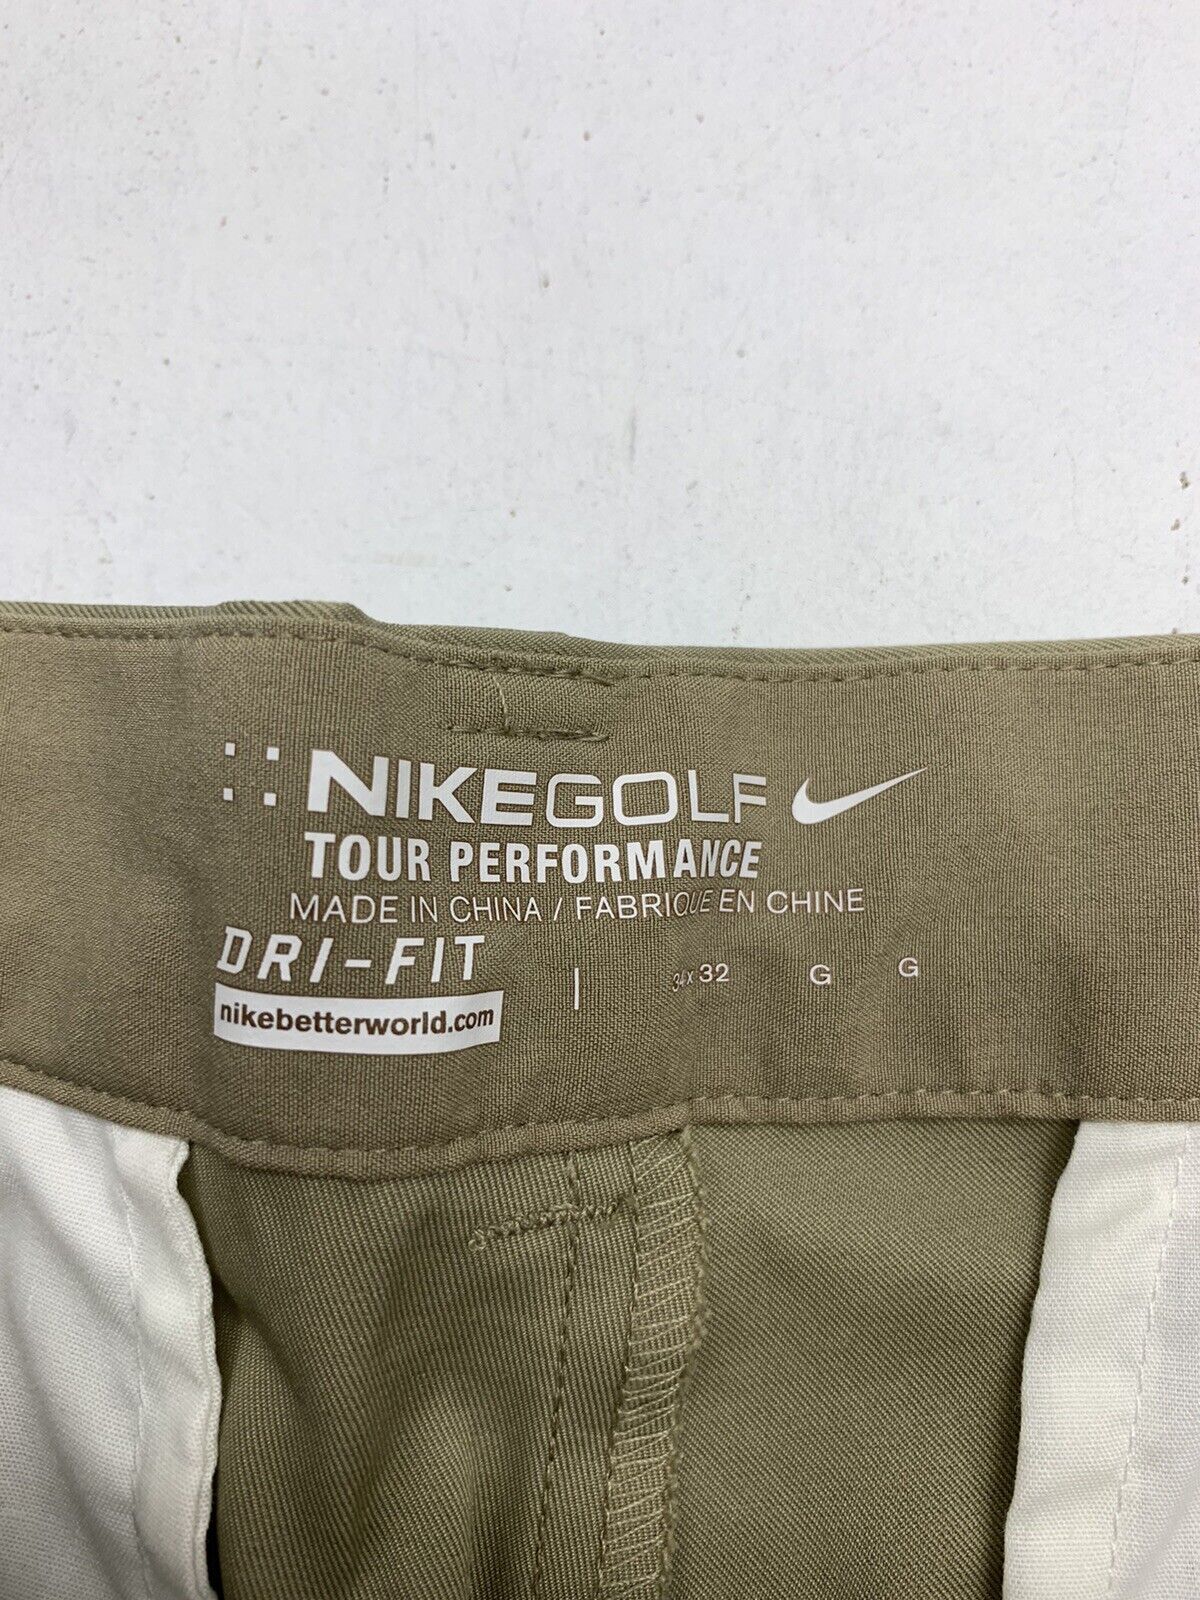 Nike Golf men's flat front pants quick dry size 34